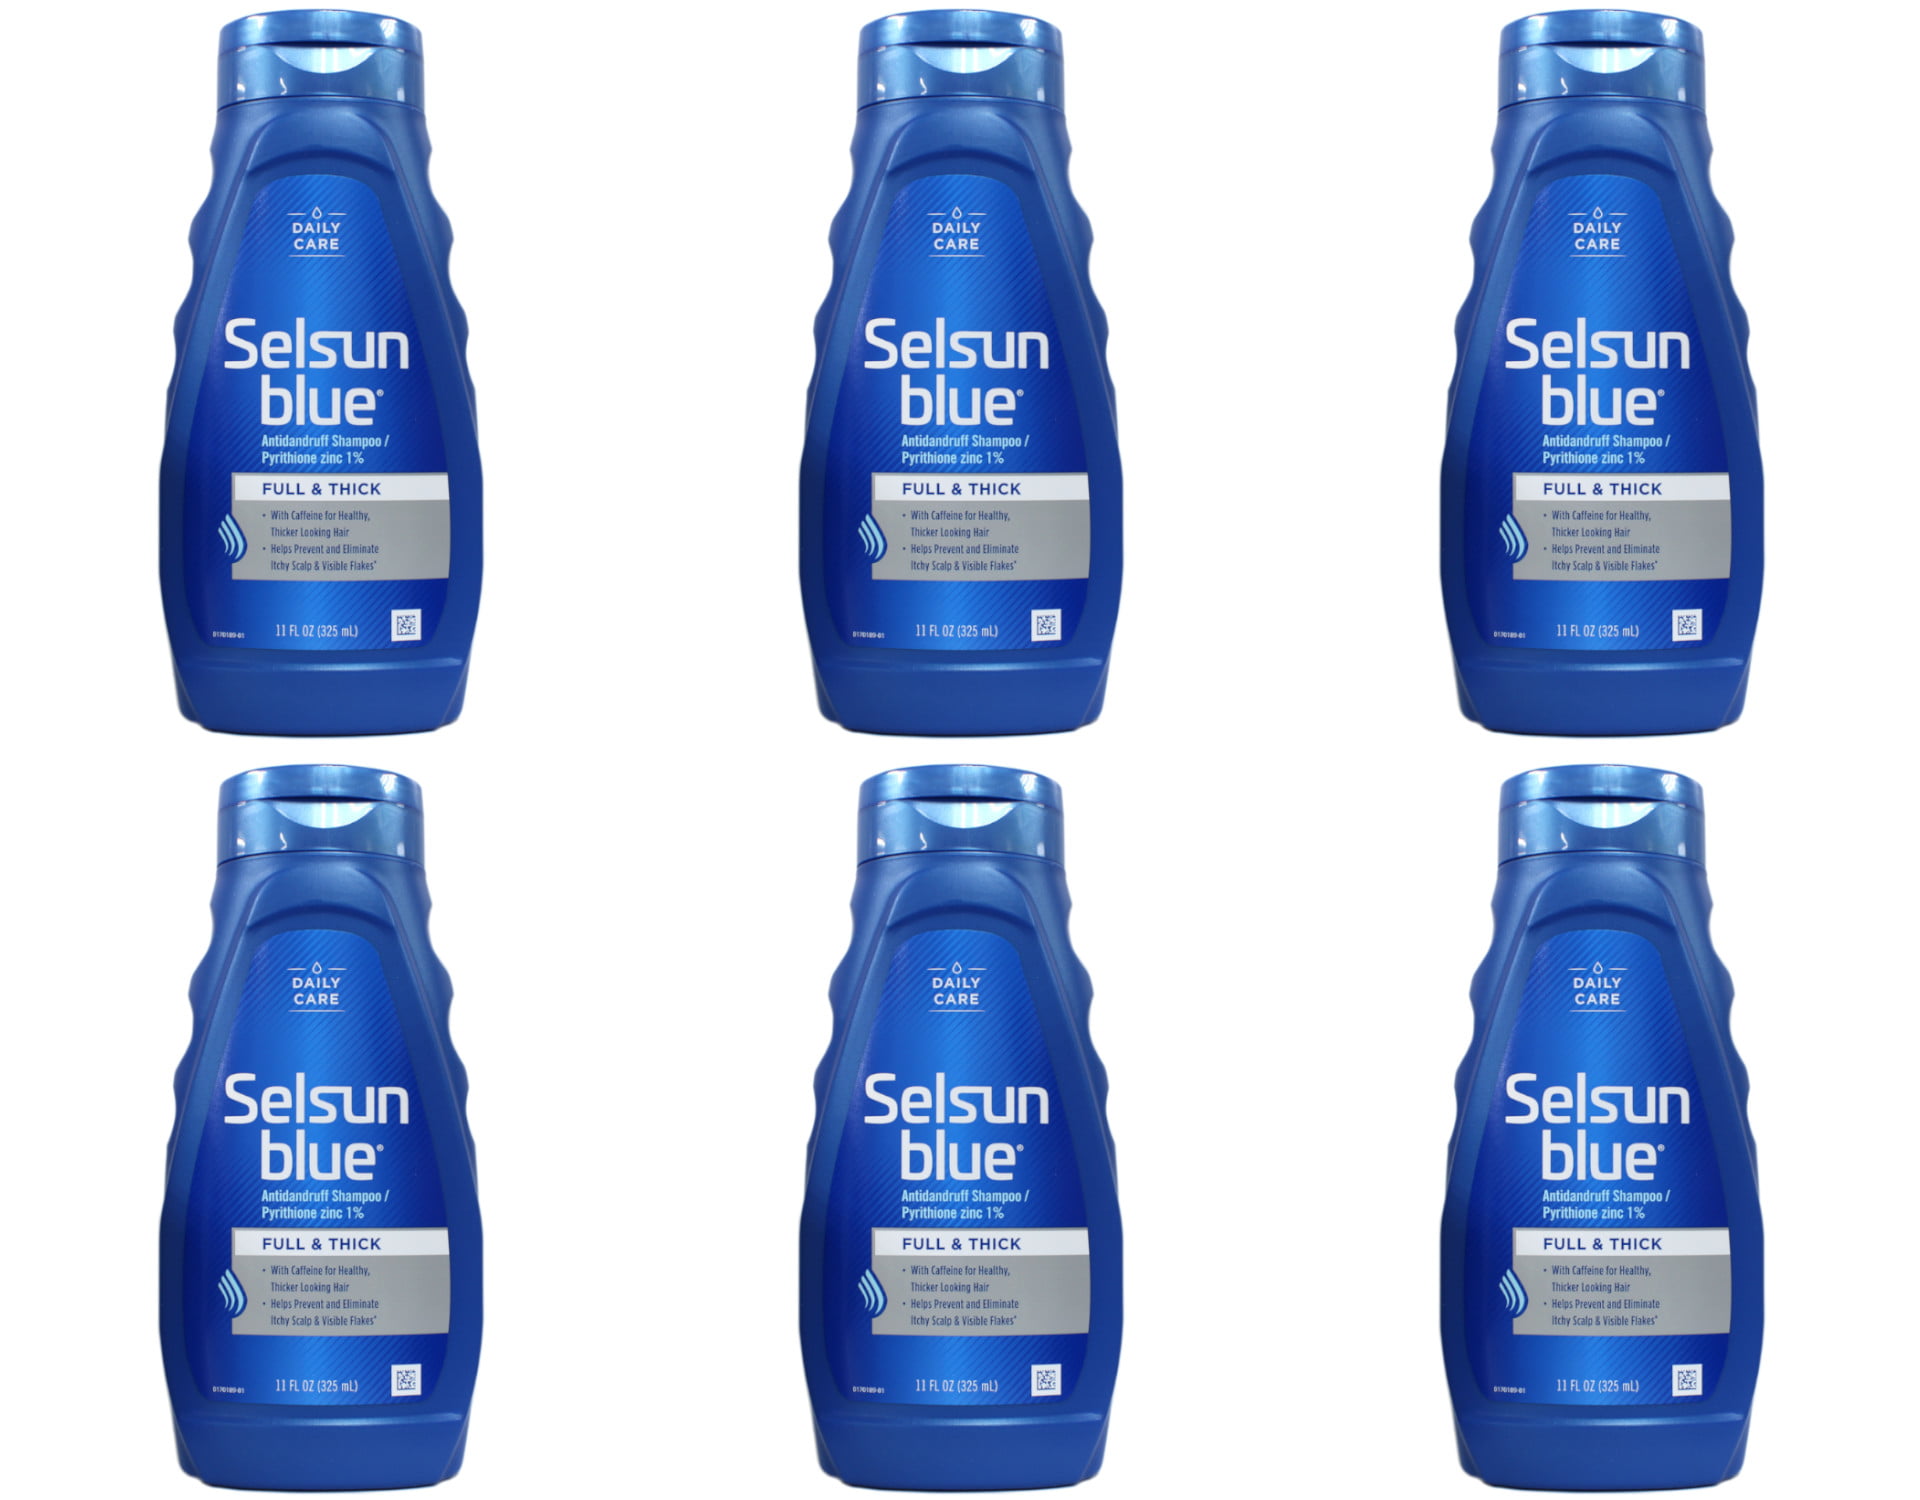 6. Selsun Blue Anti-Dandruff Shampoo - wide 5